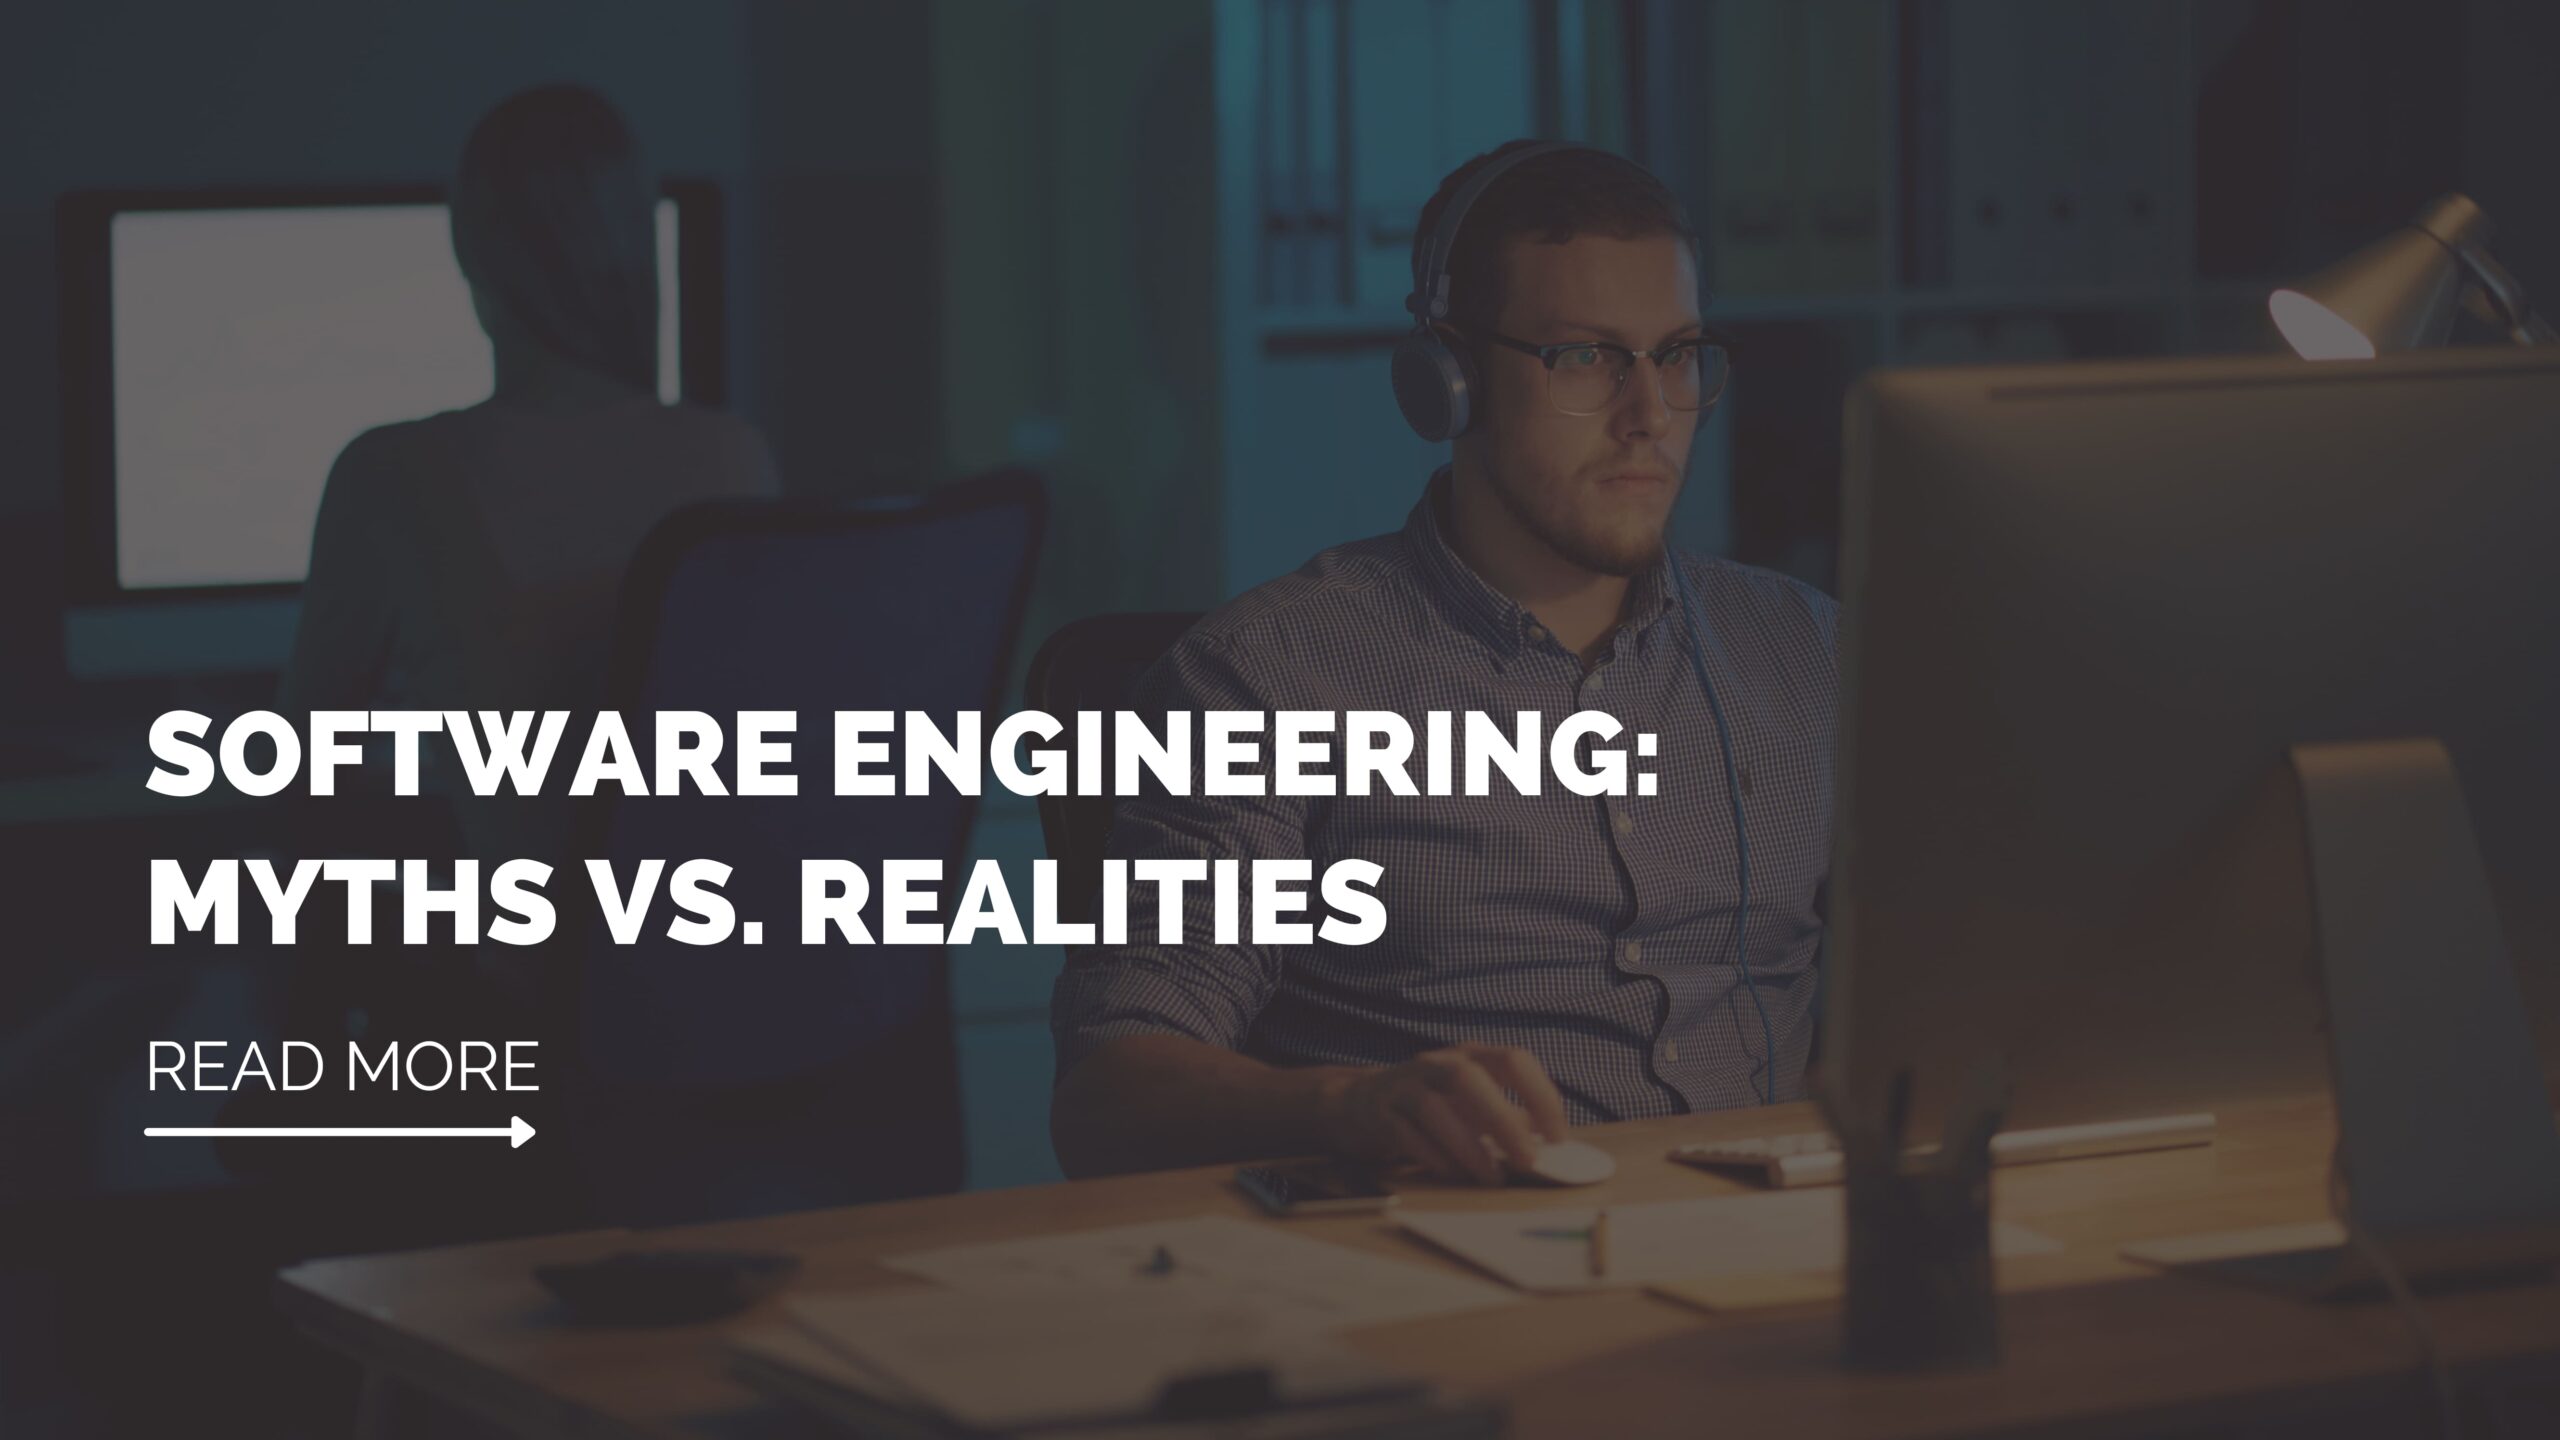 Software engineering myths vs realities